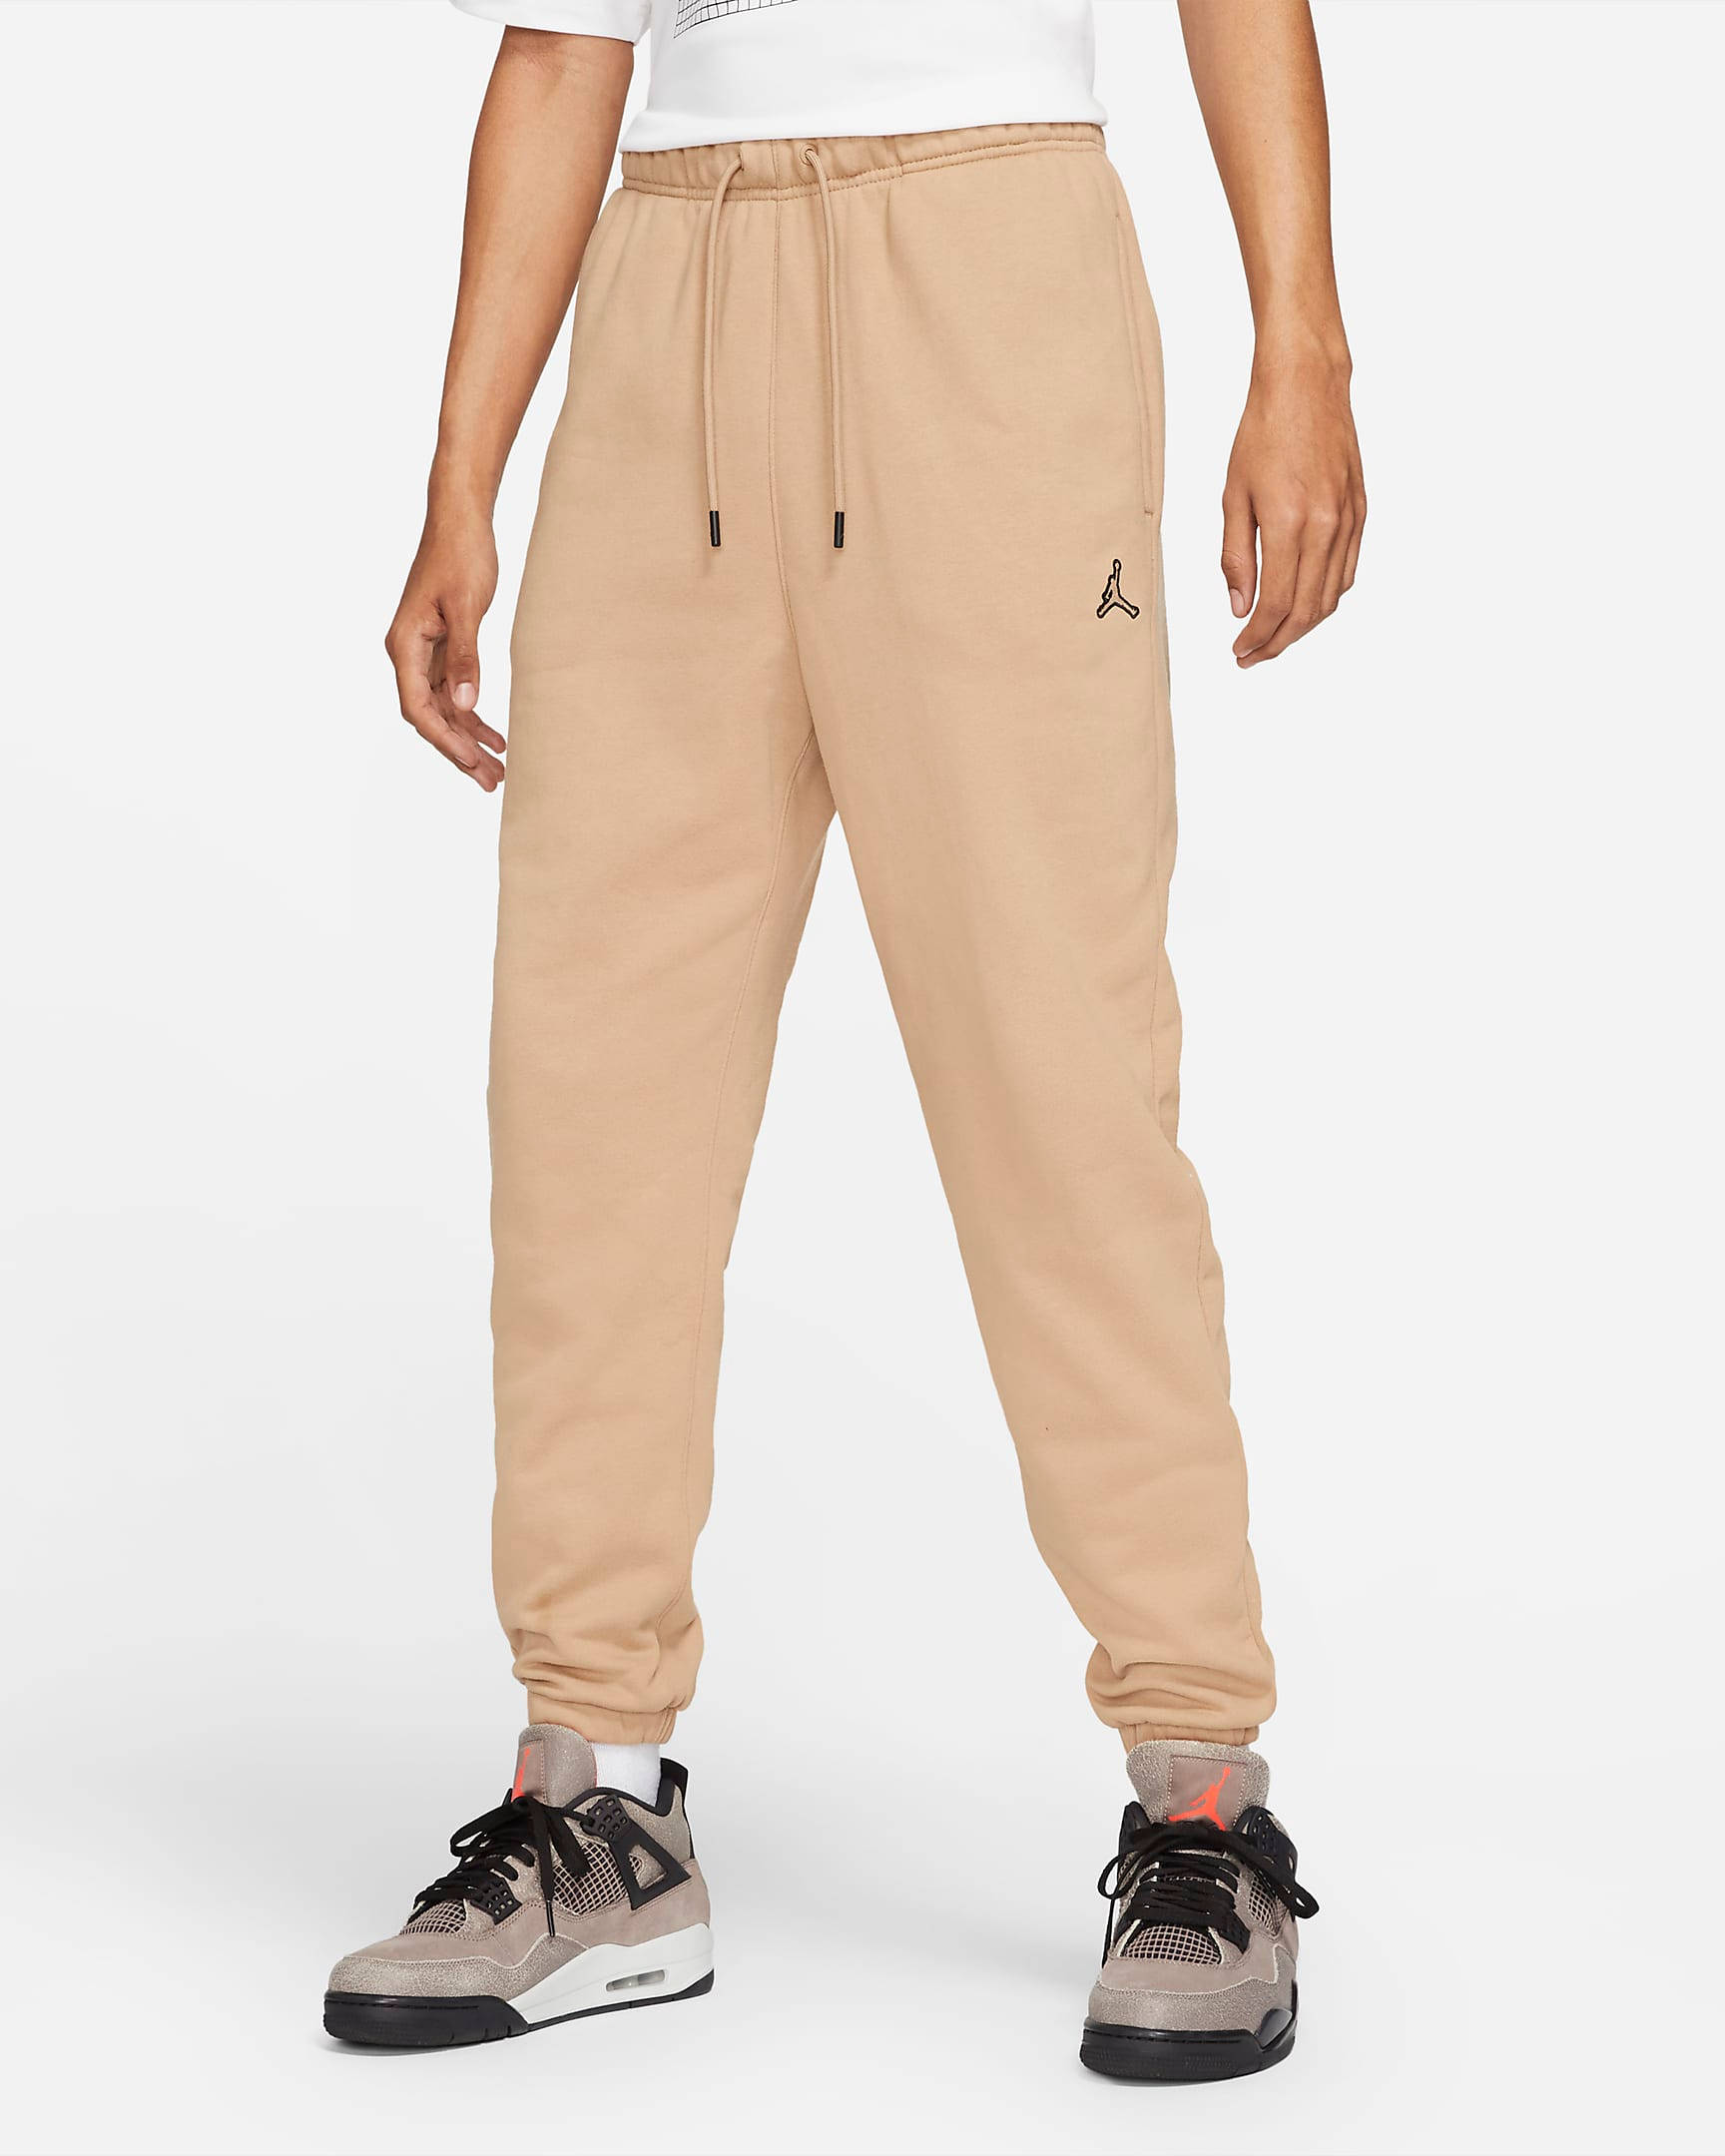 Jordan Essentials Fleece Trousers - Hemp | The Sole Supplier